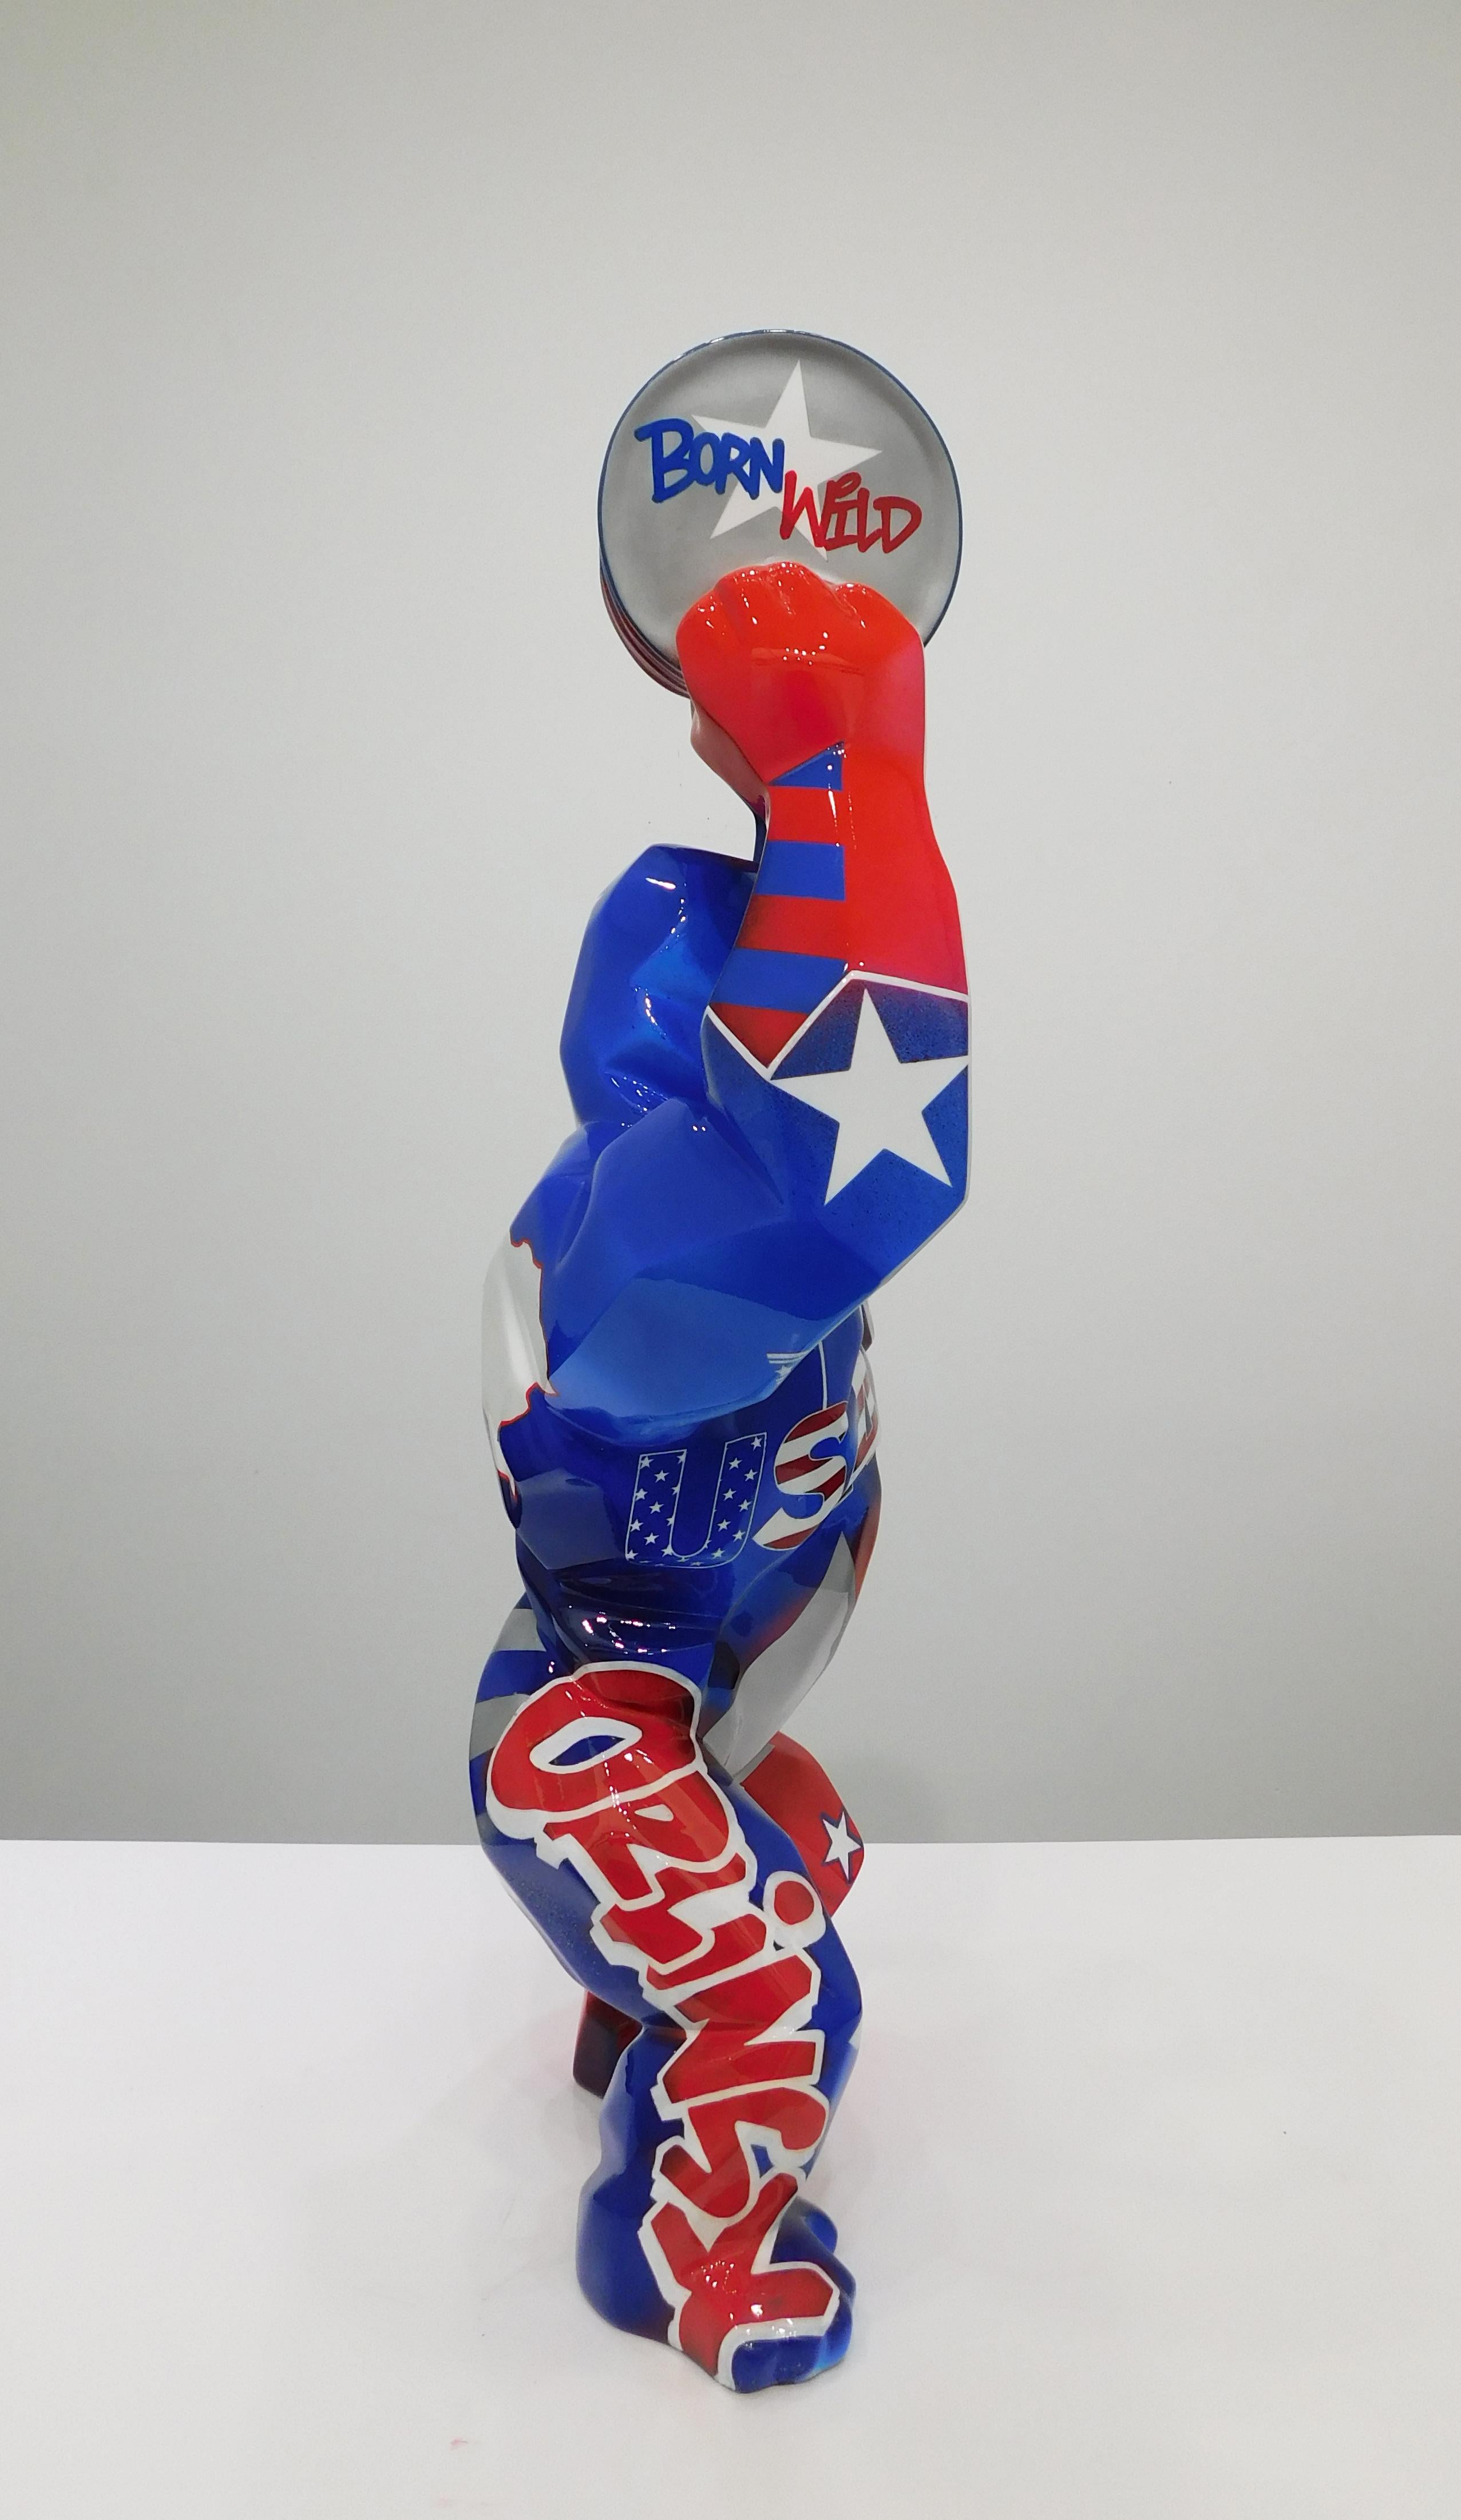 Étiquette Kong Baril USA 70 cm 1/1 - Pop Art Sculpture par Richard Orlinksi